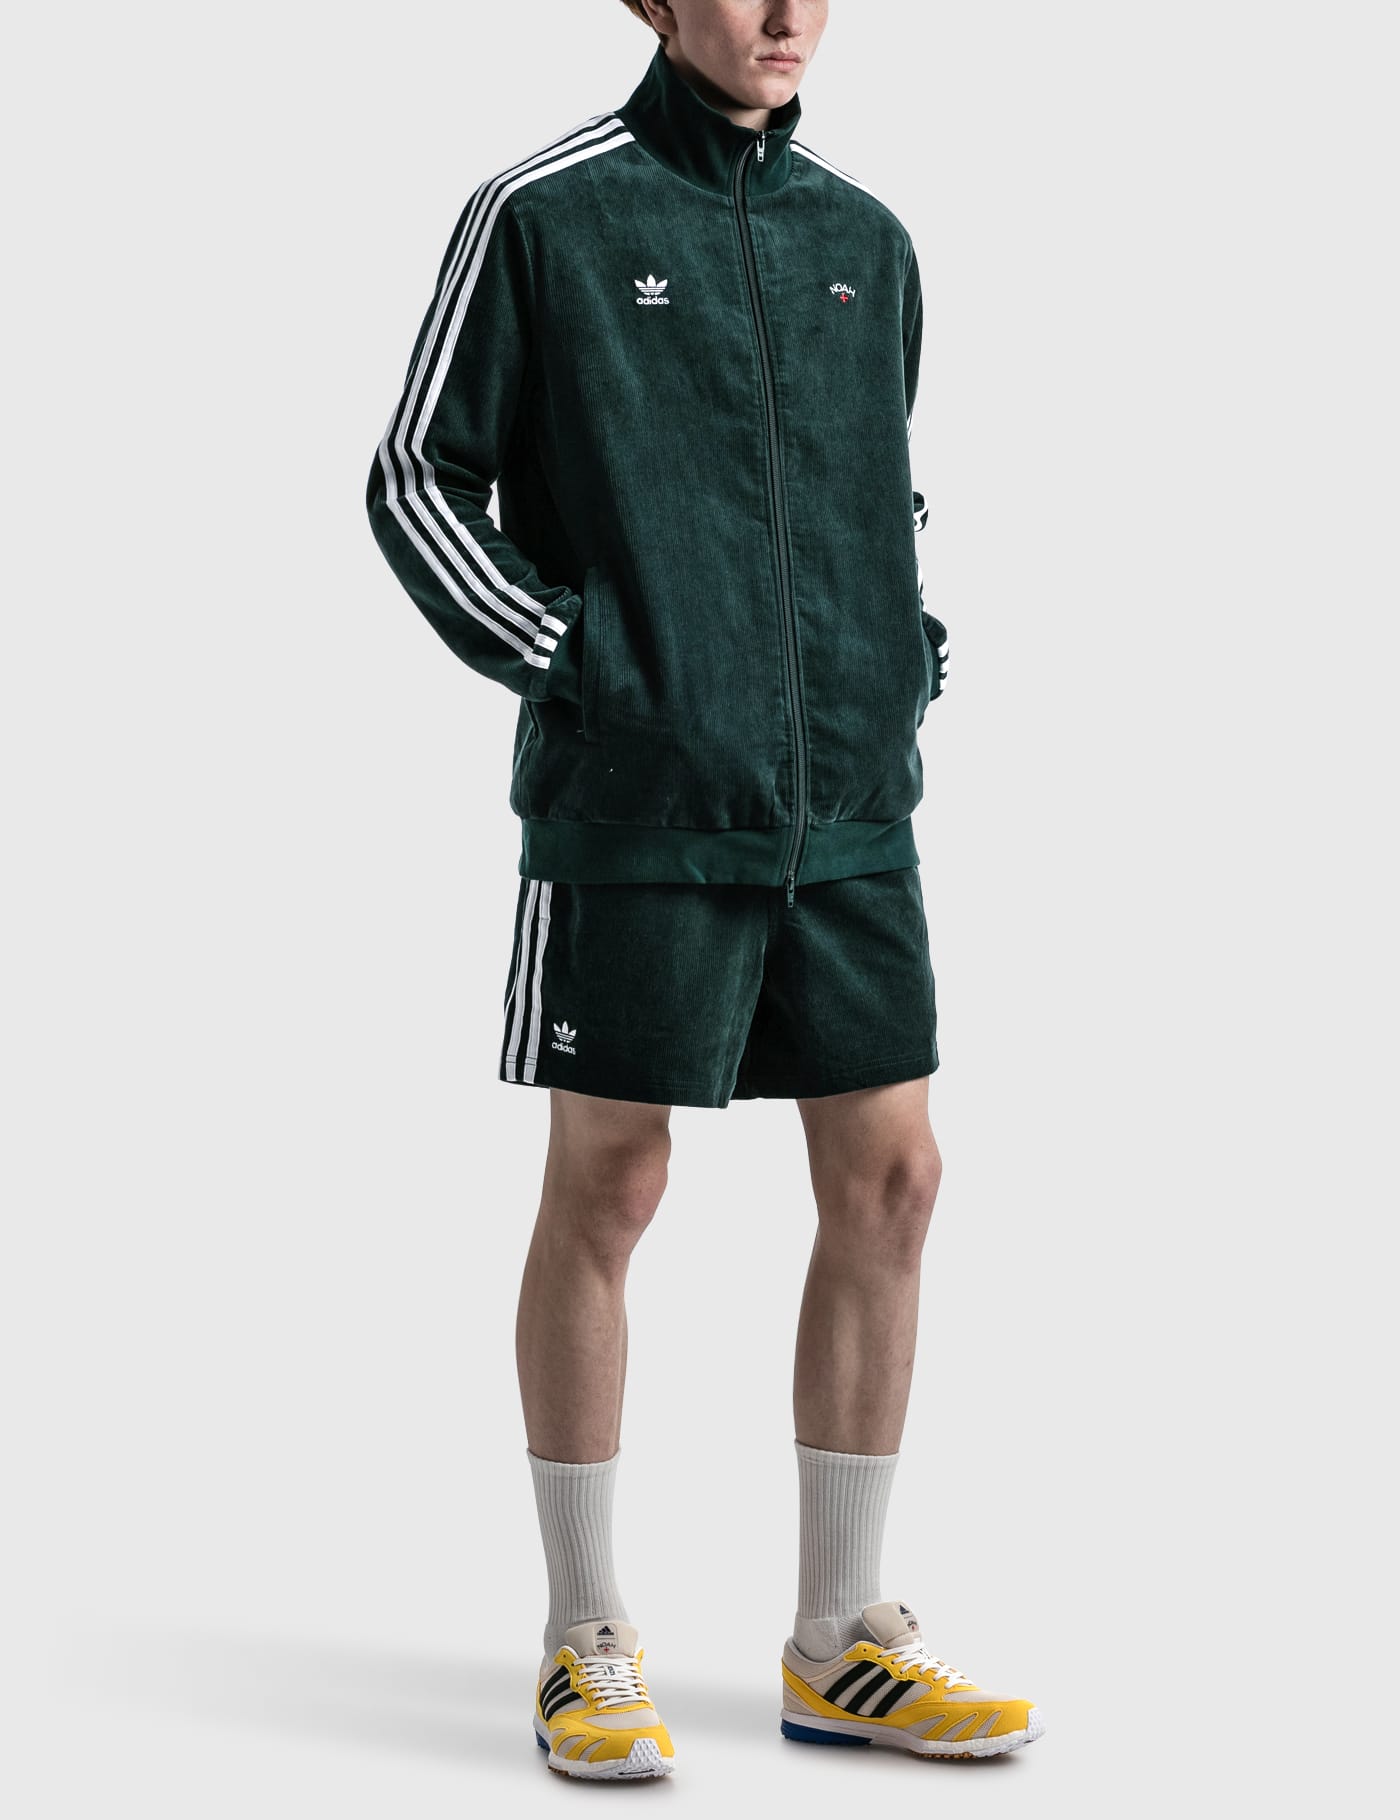 Adidas Originals - Adidas Originals x Noah Corduroy Track Jacket 